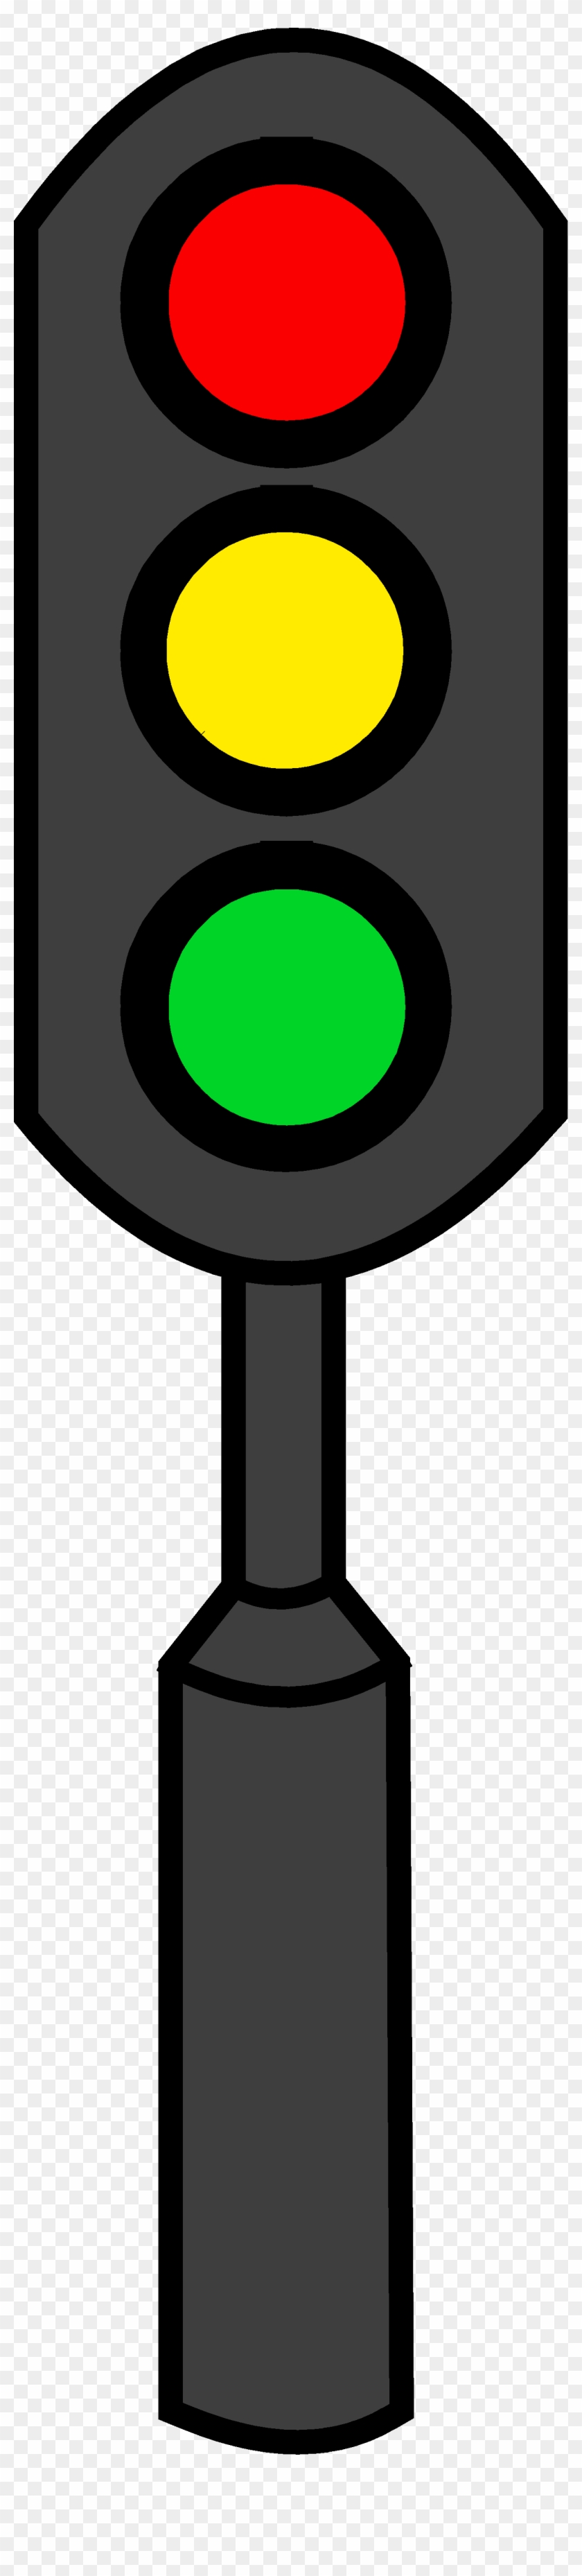 Stop Light Cartoon - Traffic Light Clip Art Png - Free Transparent PNG  Clipart Images Download